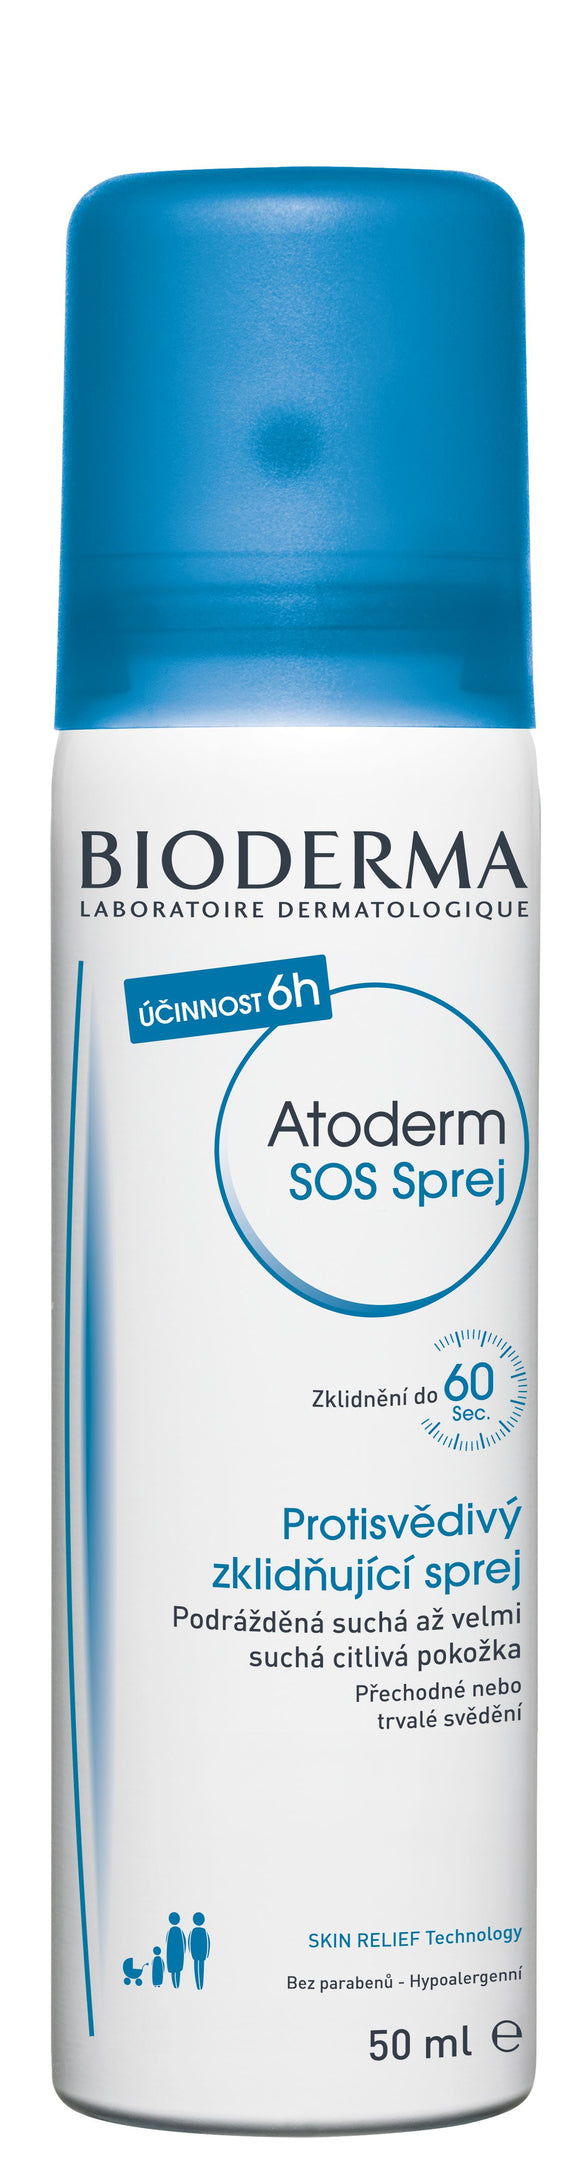 Bioderma Atoderm SOS Spray 50 ml - mydrxm.com